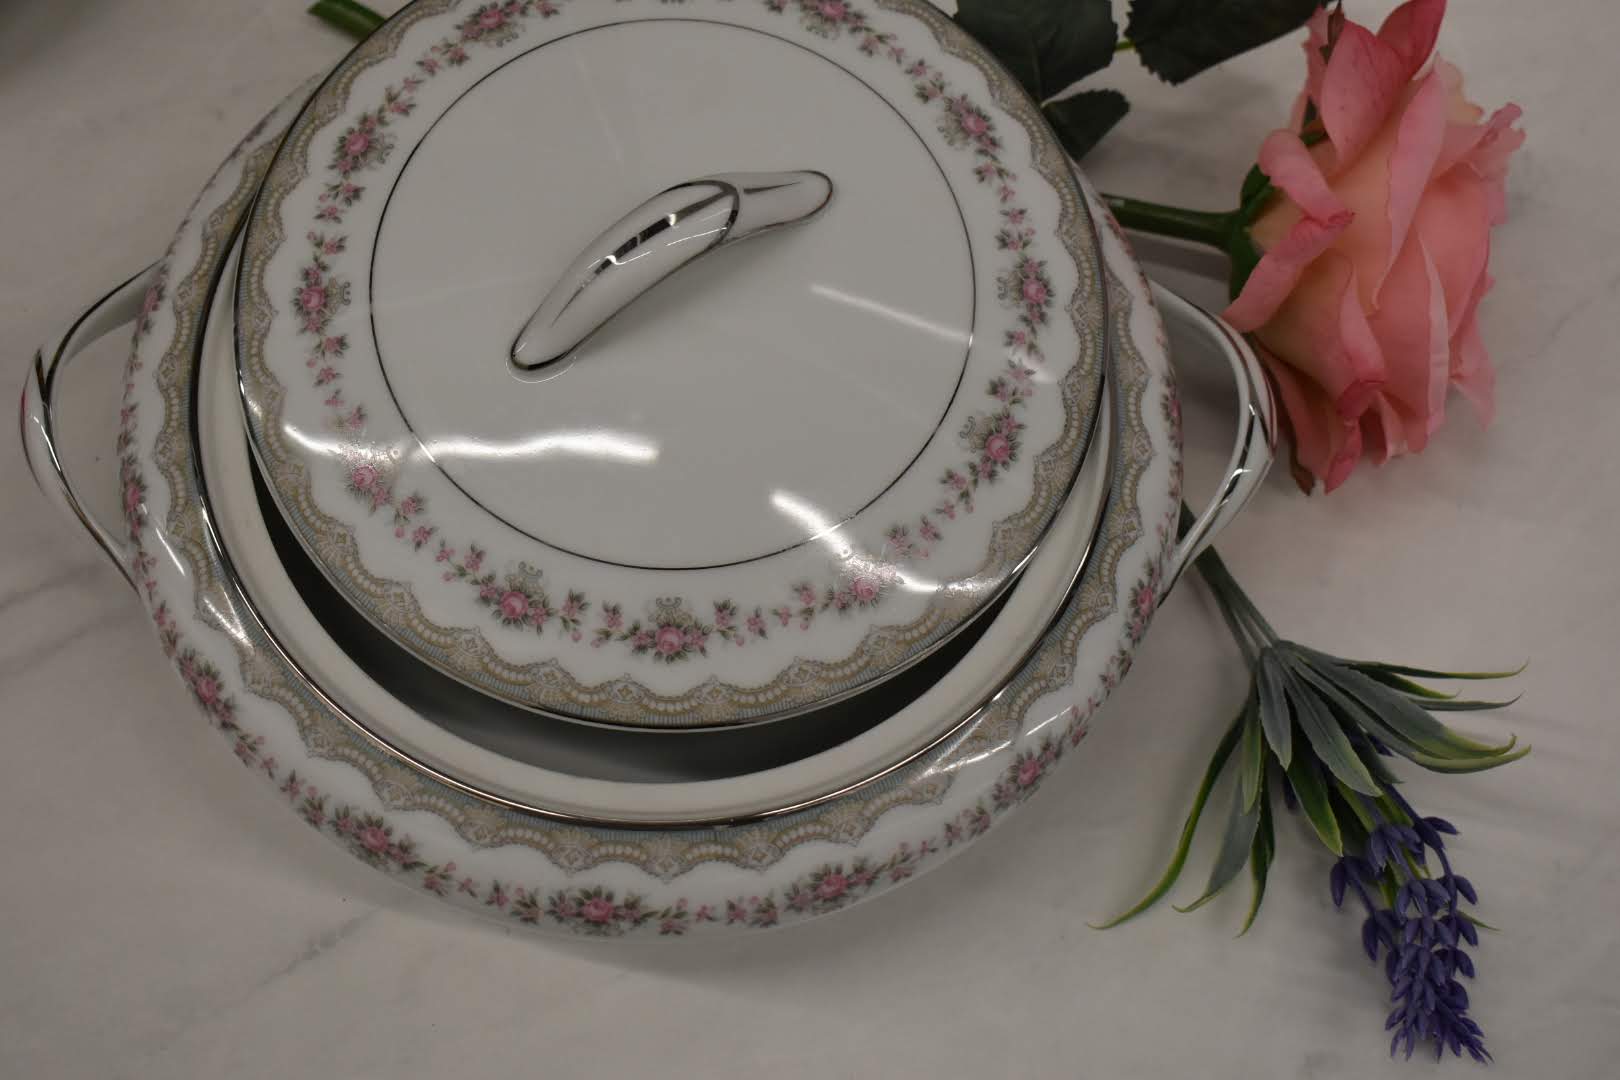 Noritake Glenwood - Fine Porcelain China - Platinum Rim - 5770 pattern - Round Vegetable Bowl with Lid